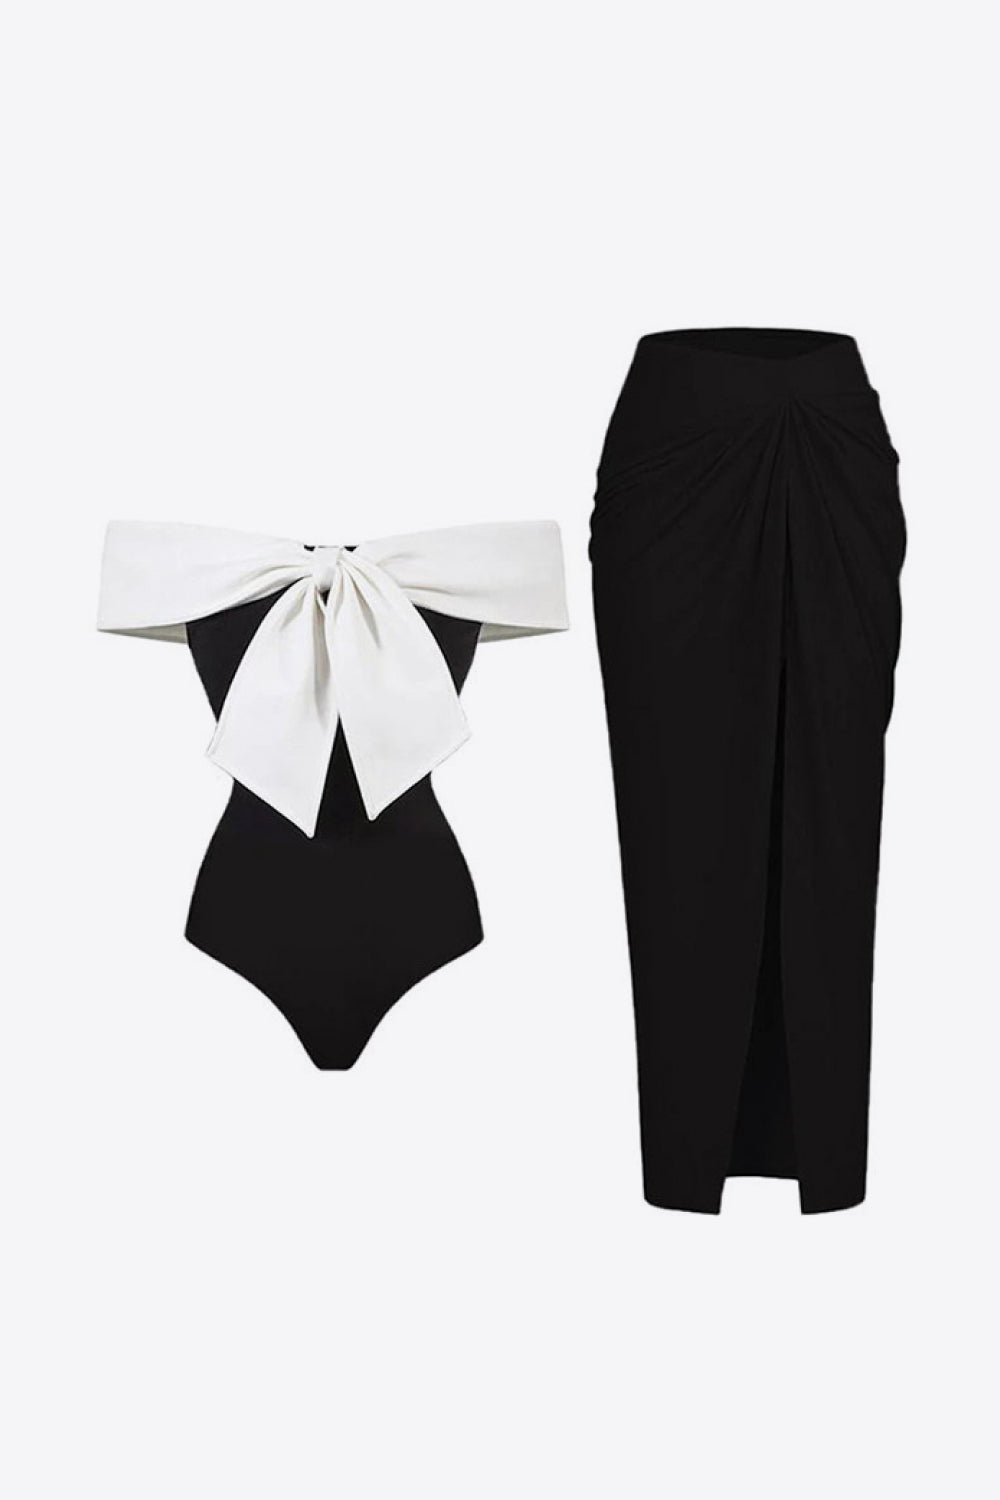 BLACK/WHITE Contrast Bow Detail Two-Piece Swim Set - women's swimsuit at TFC&H Co.